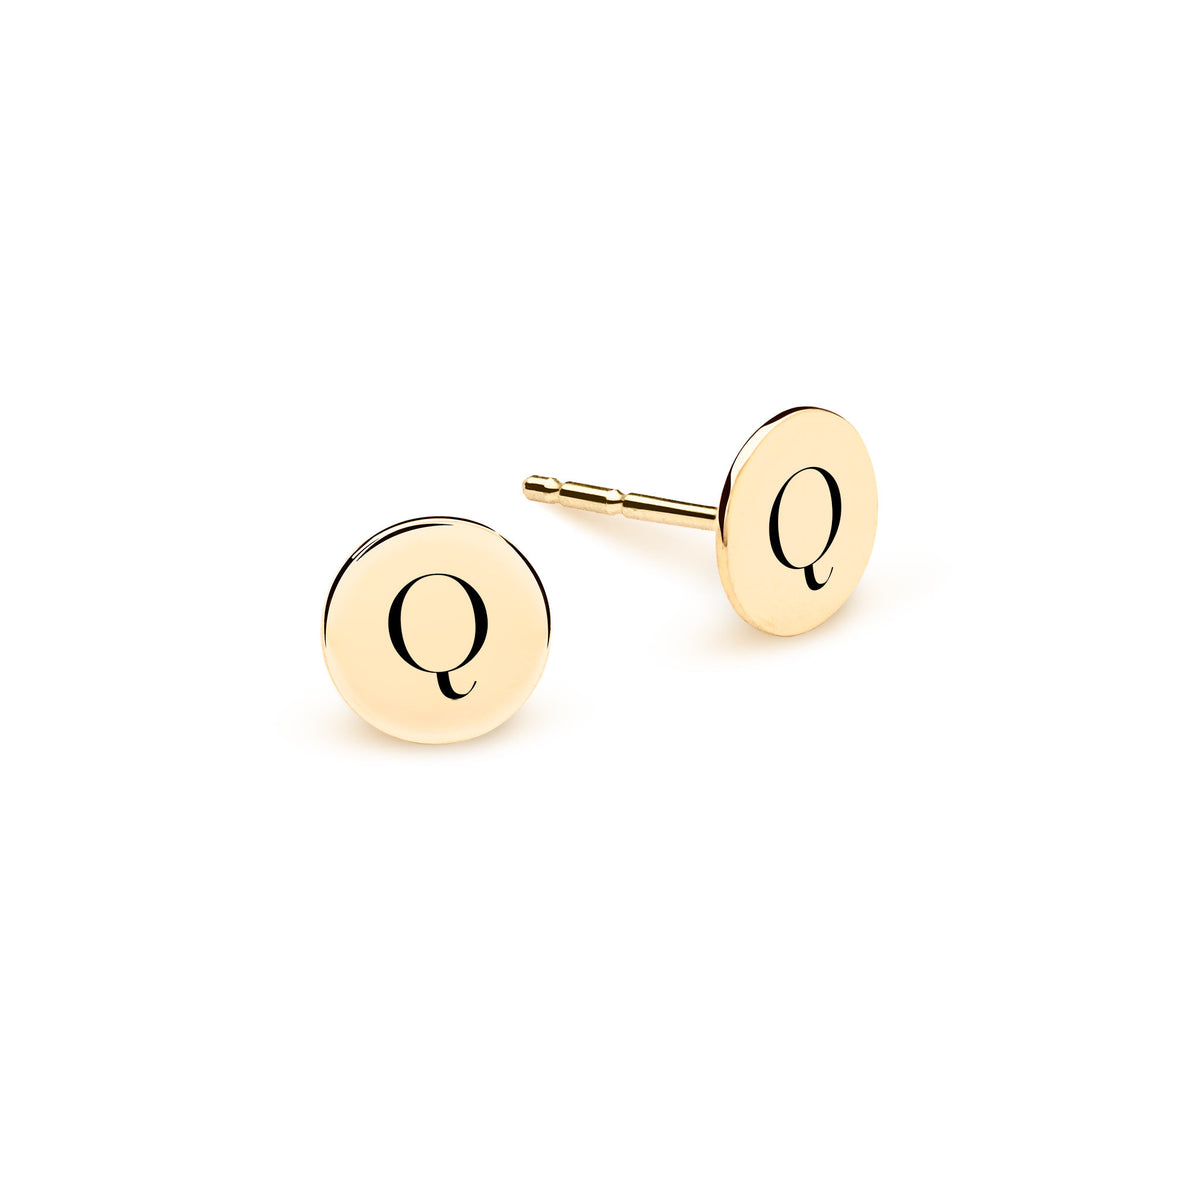 Letter Q Stud Earrings in 14k Gold - 14k Yellow Gold